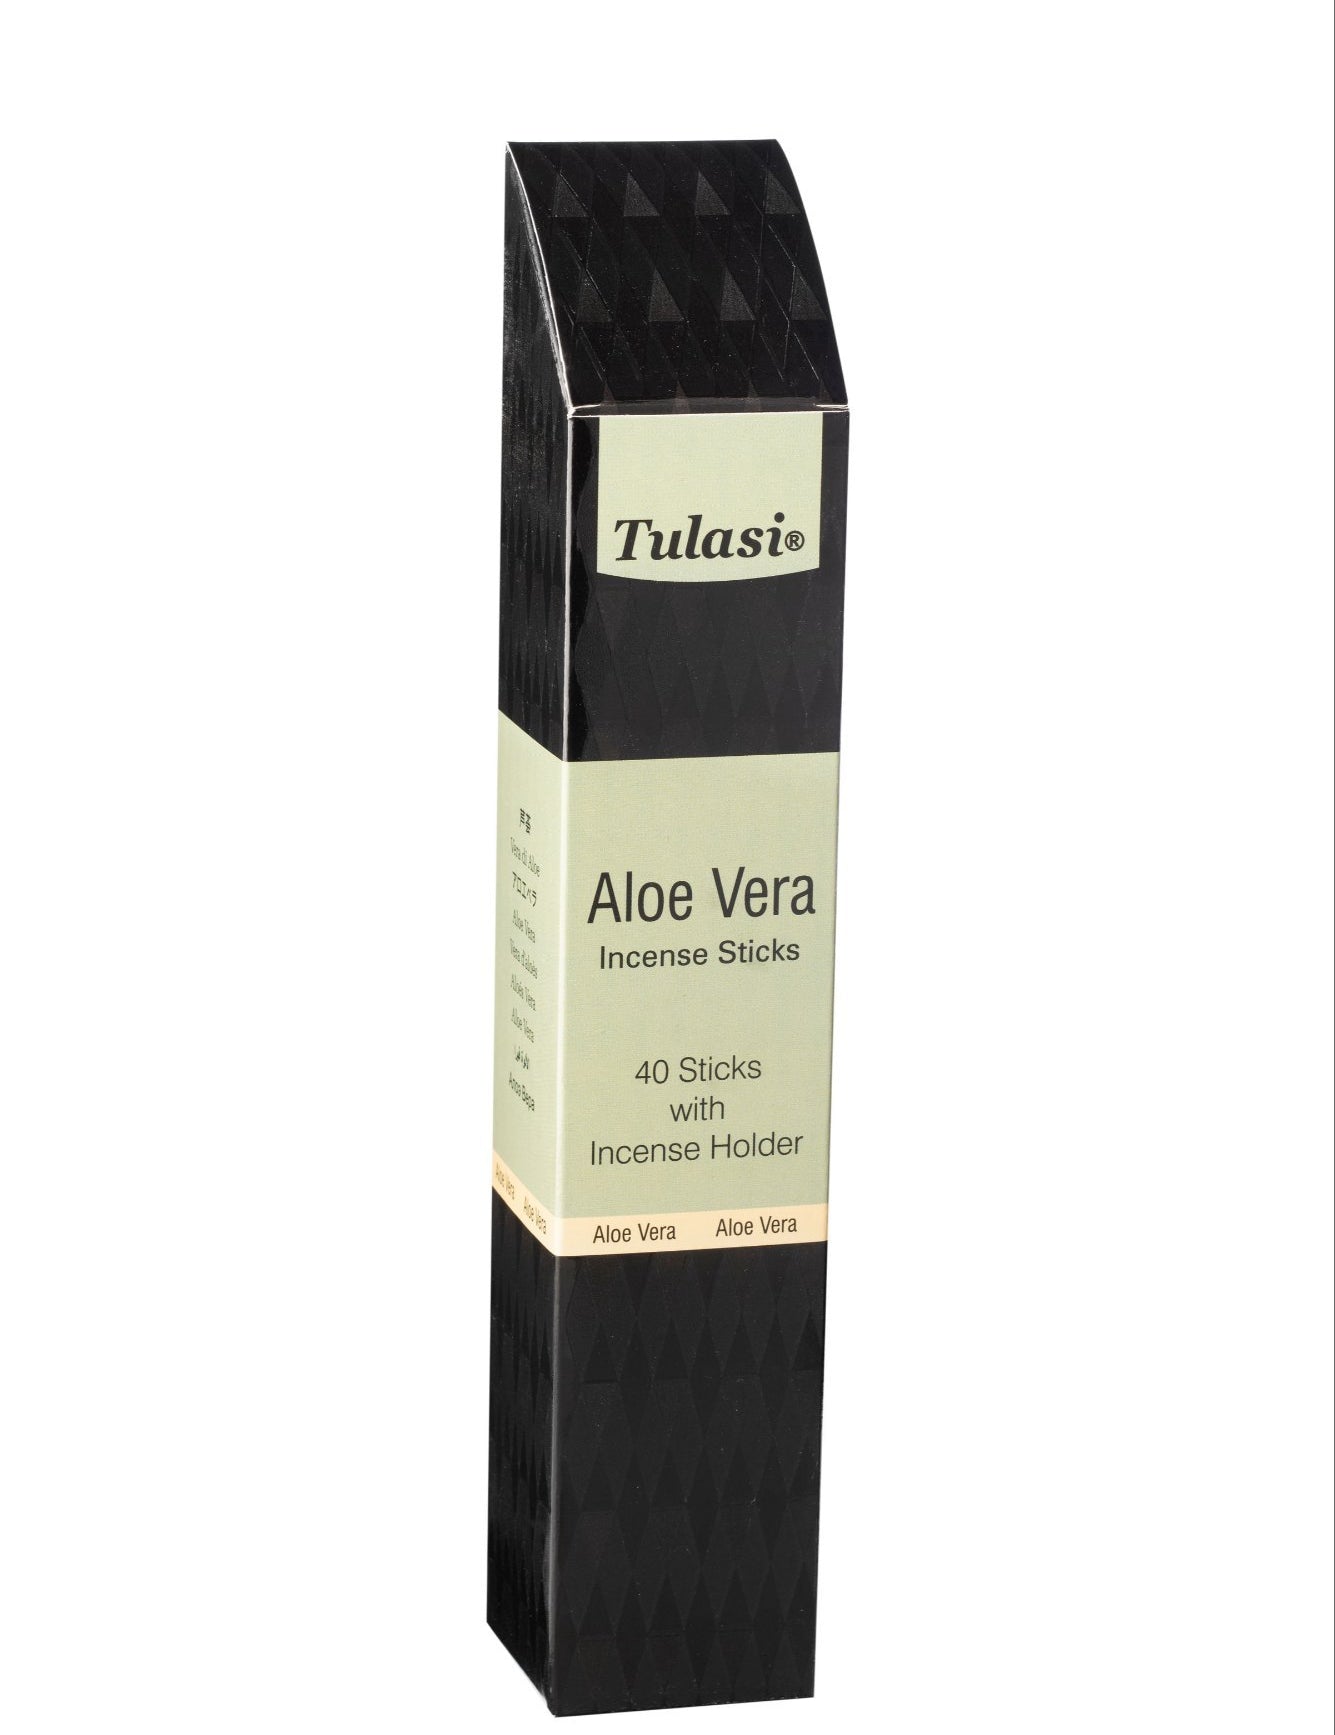 tulasi-aloe-vera-incense-sticks.jpg